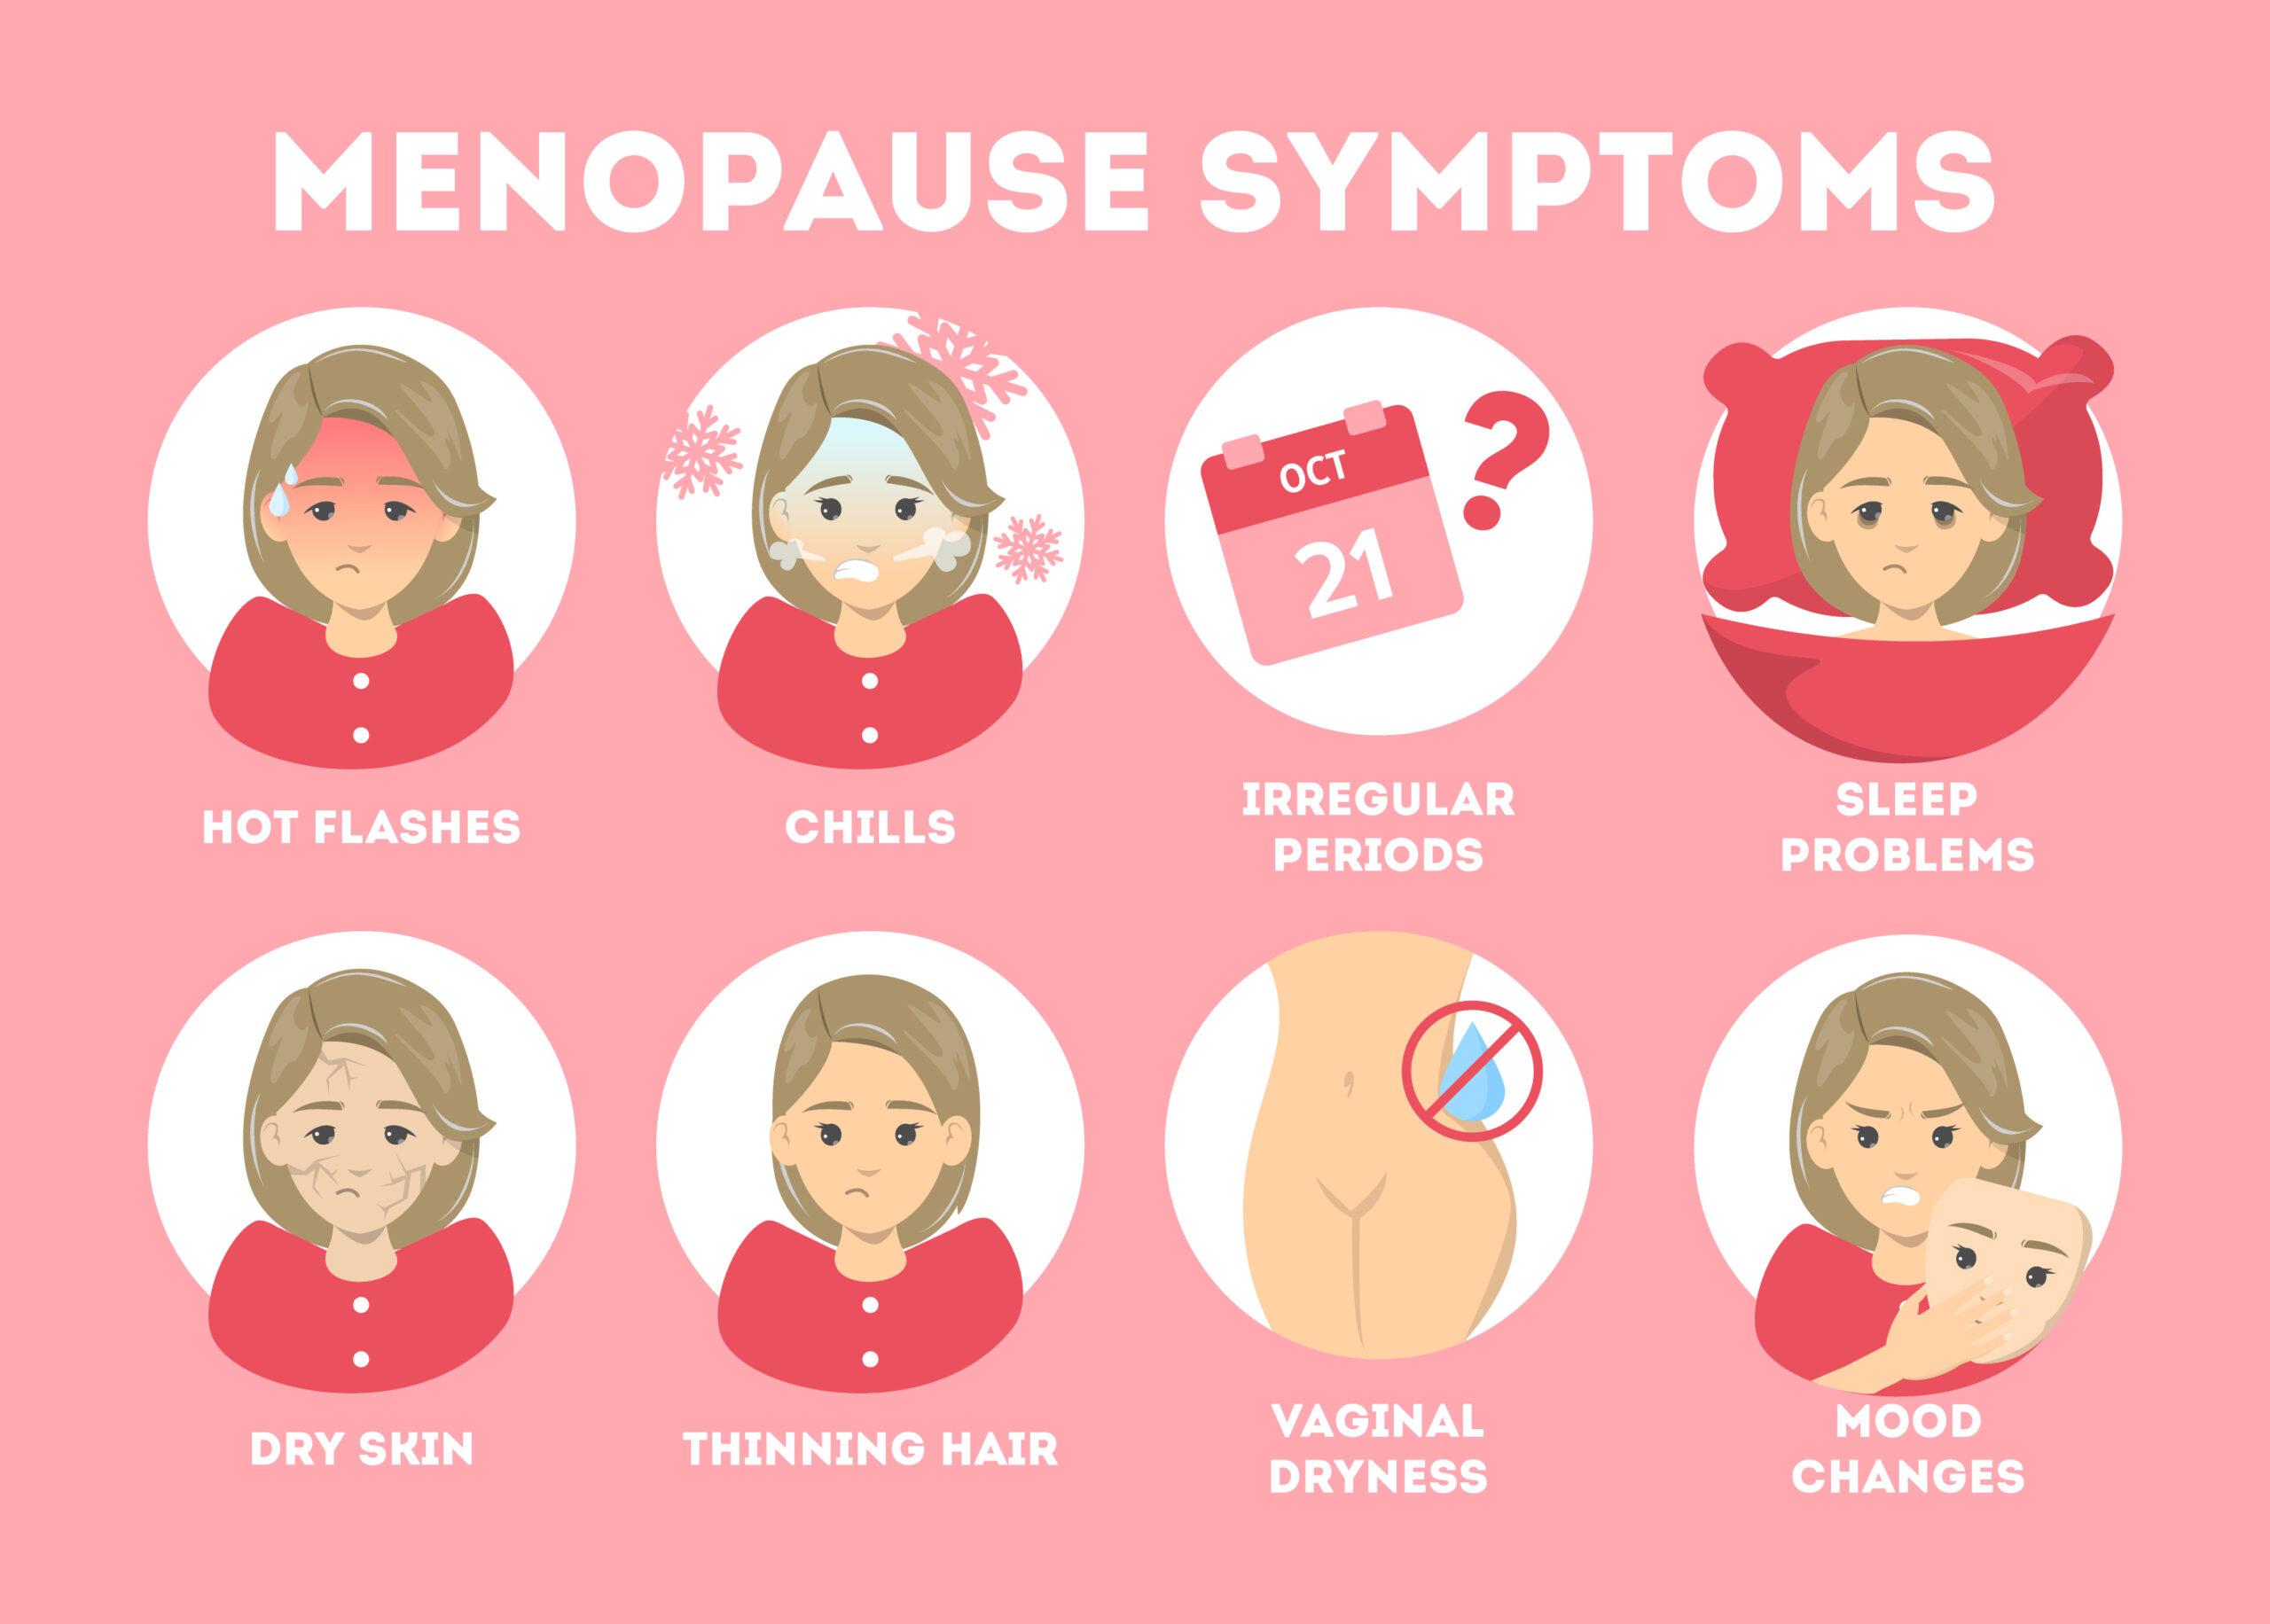 Menopause Symptom Relief